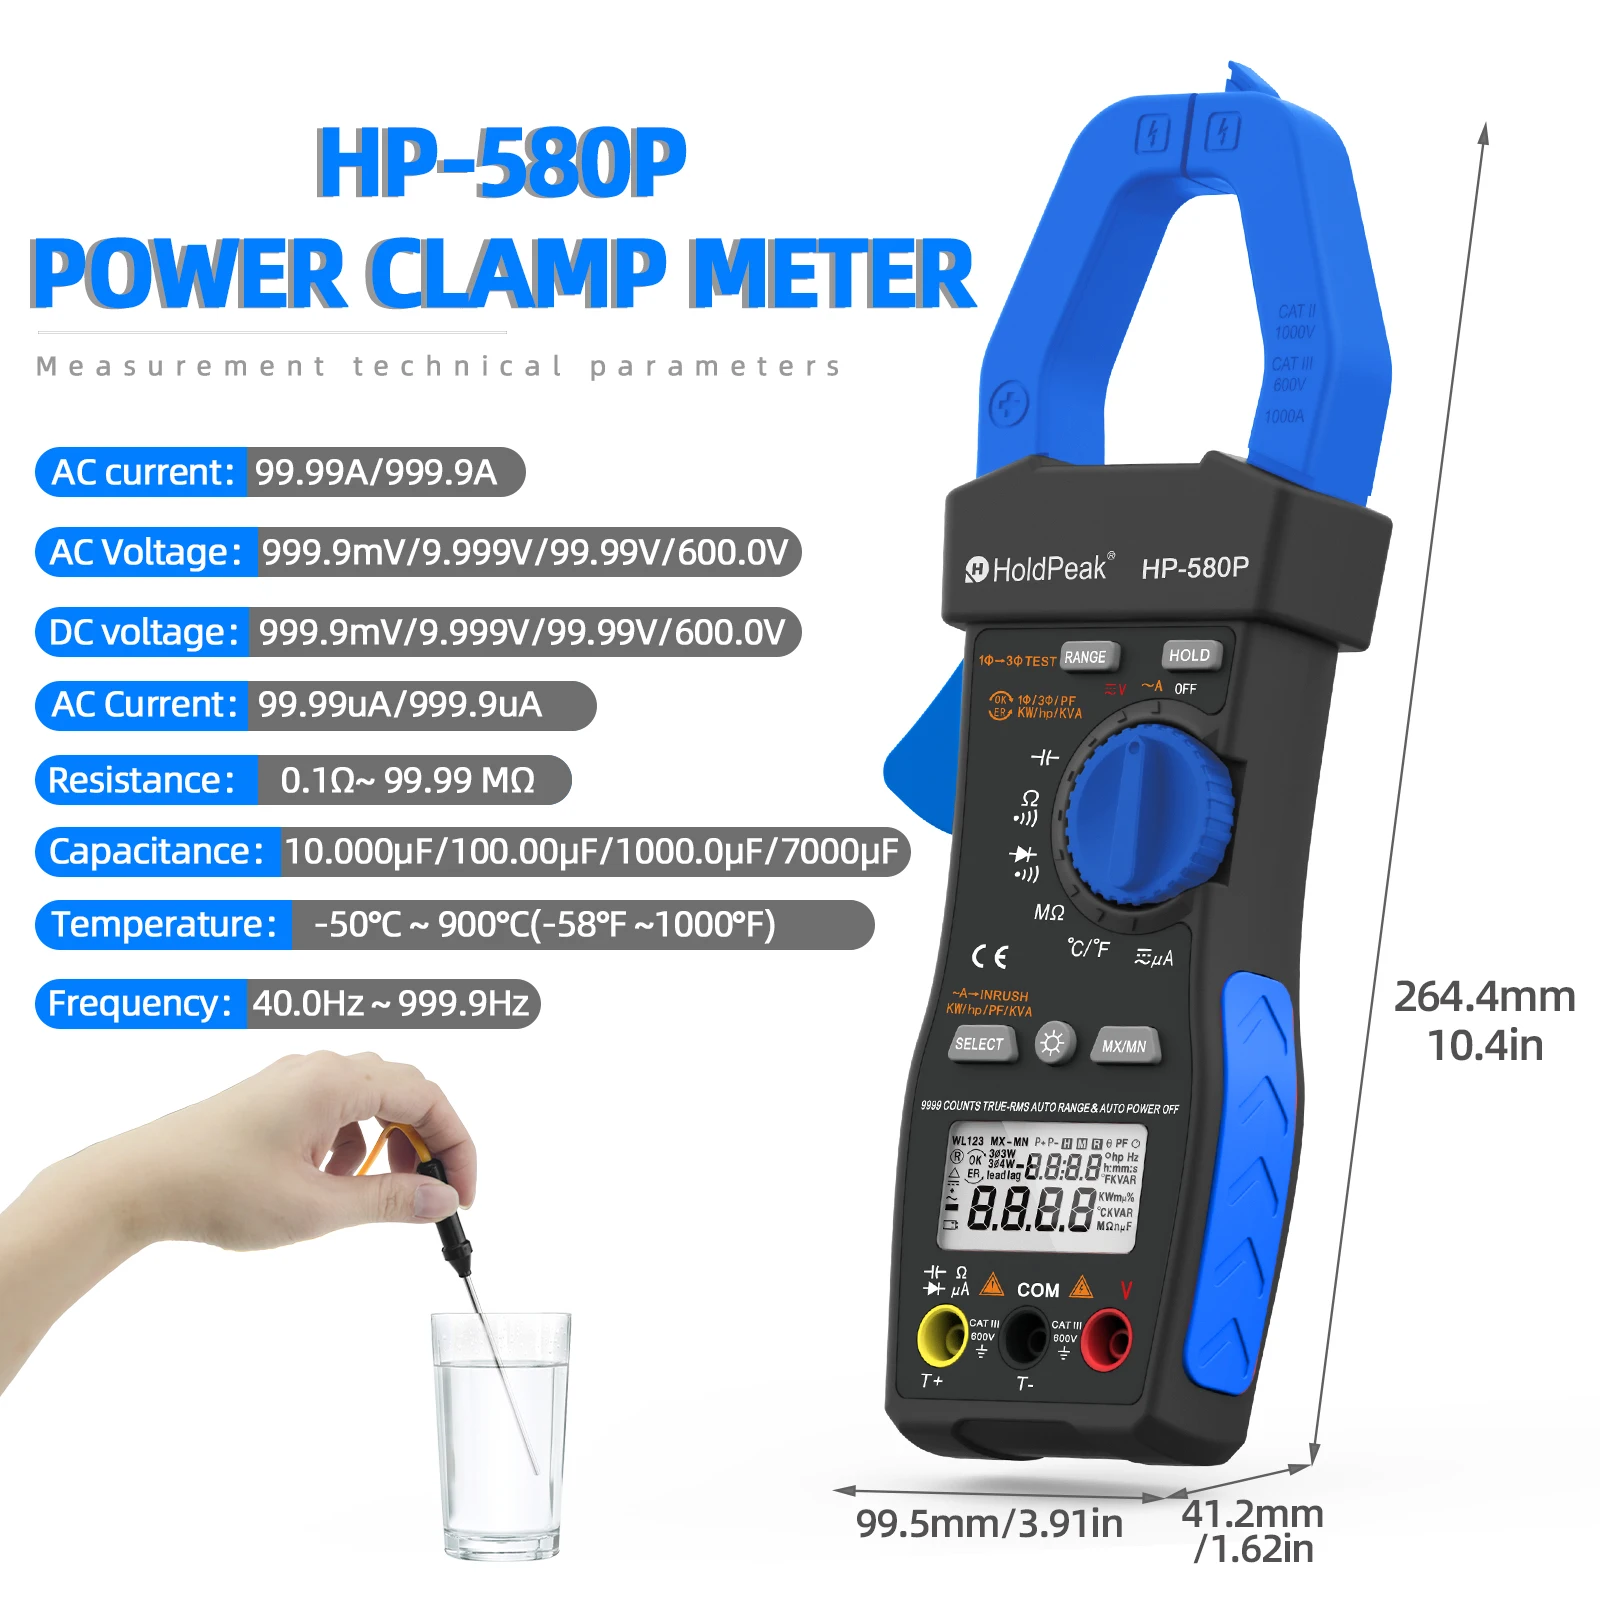 HOLDPEAK HP-580P Three-Phase  Clamp Meter 9999 Display Power Tester Meter In-Rush Current,True RMS,ACV,ACA,KW,KVA,for HVAC